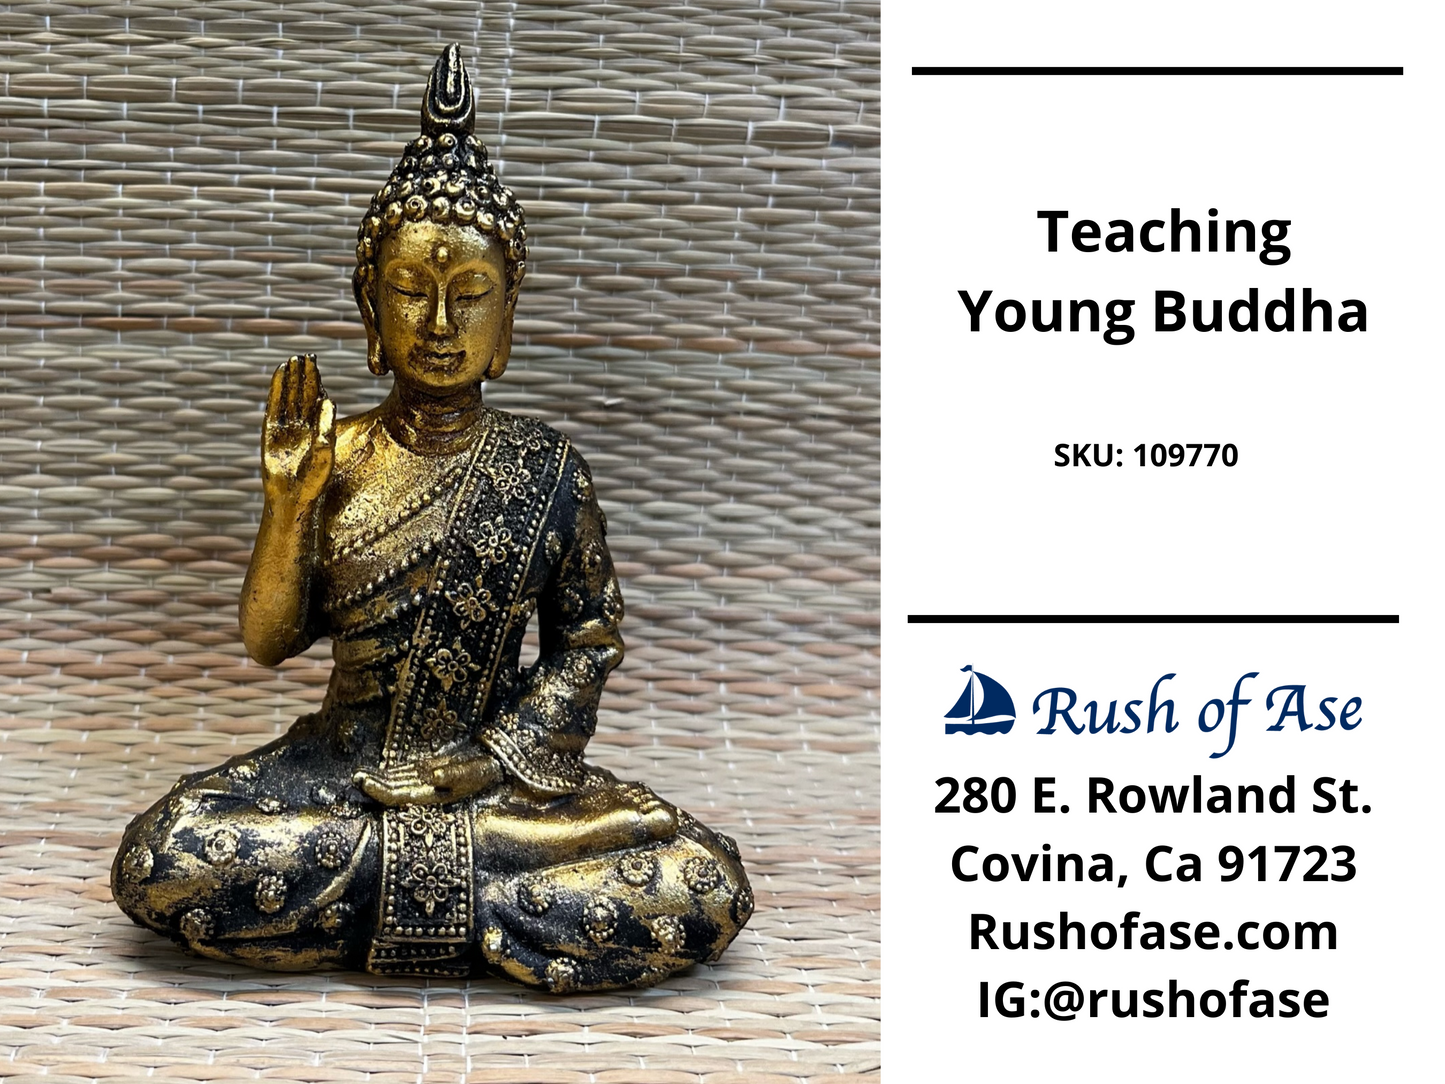 Decor | Young Buddha - Meditating, Teaching, and Praying Statues